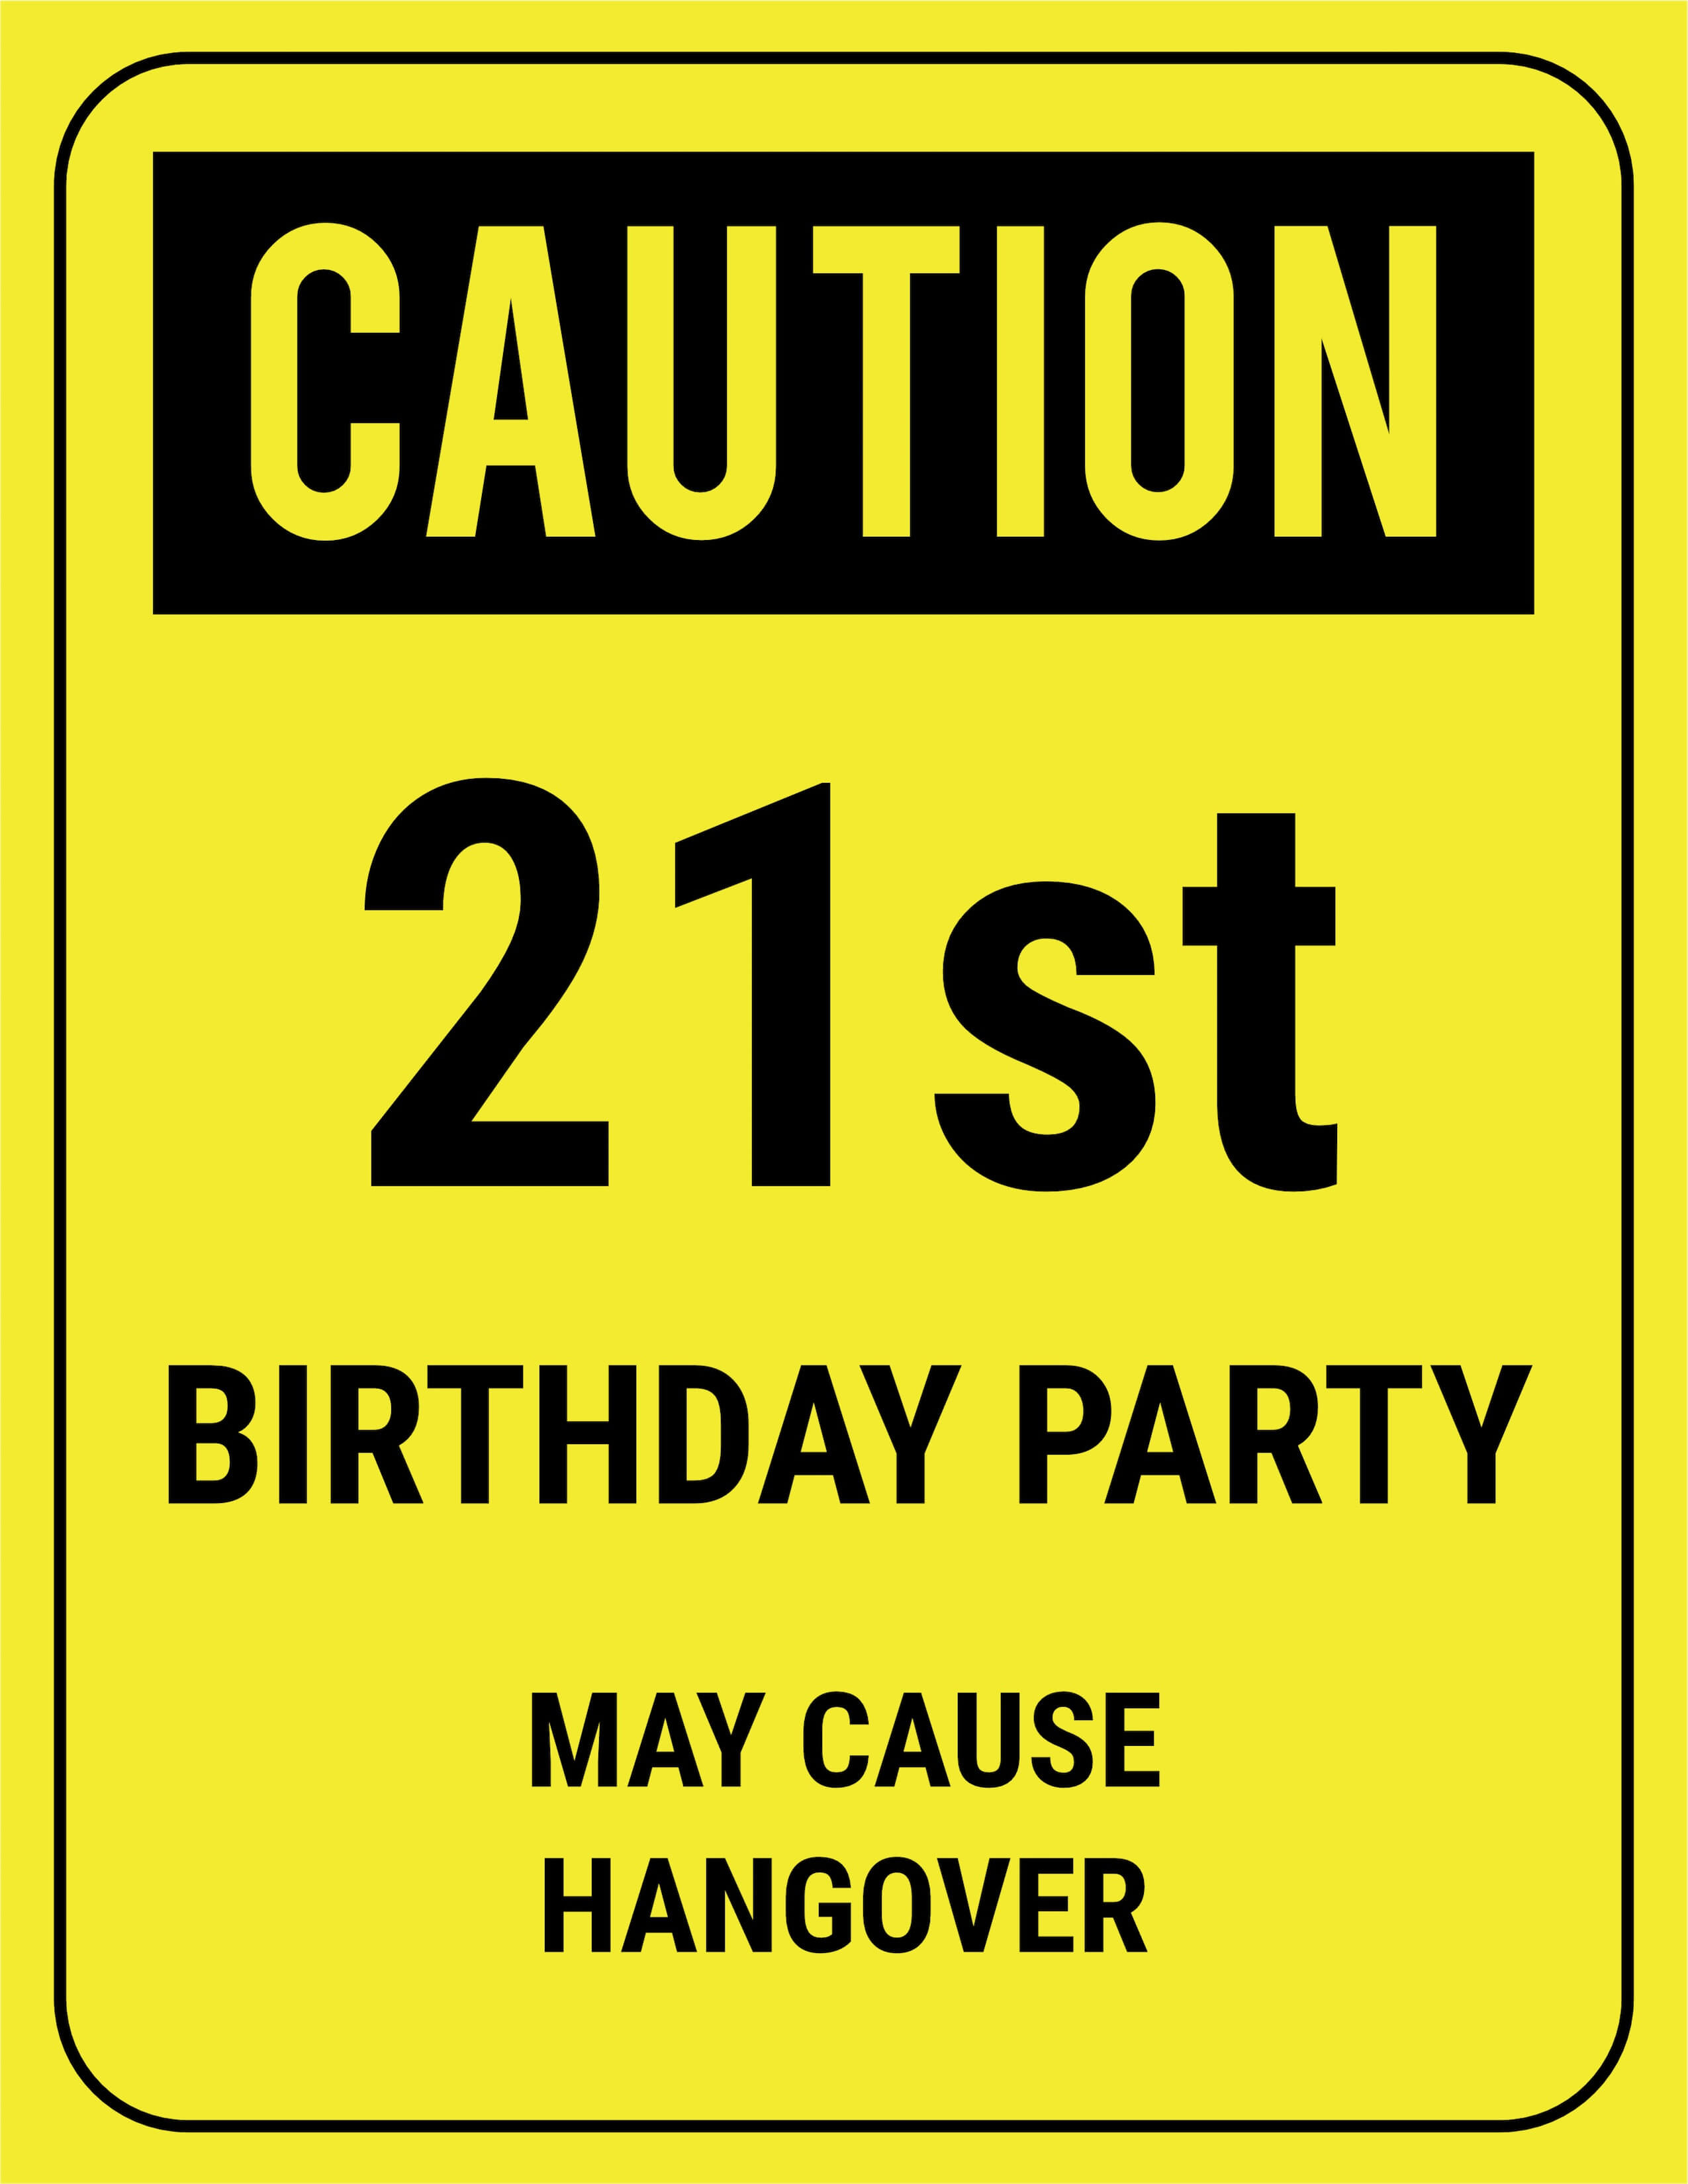 happy 21st birthday signs